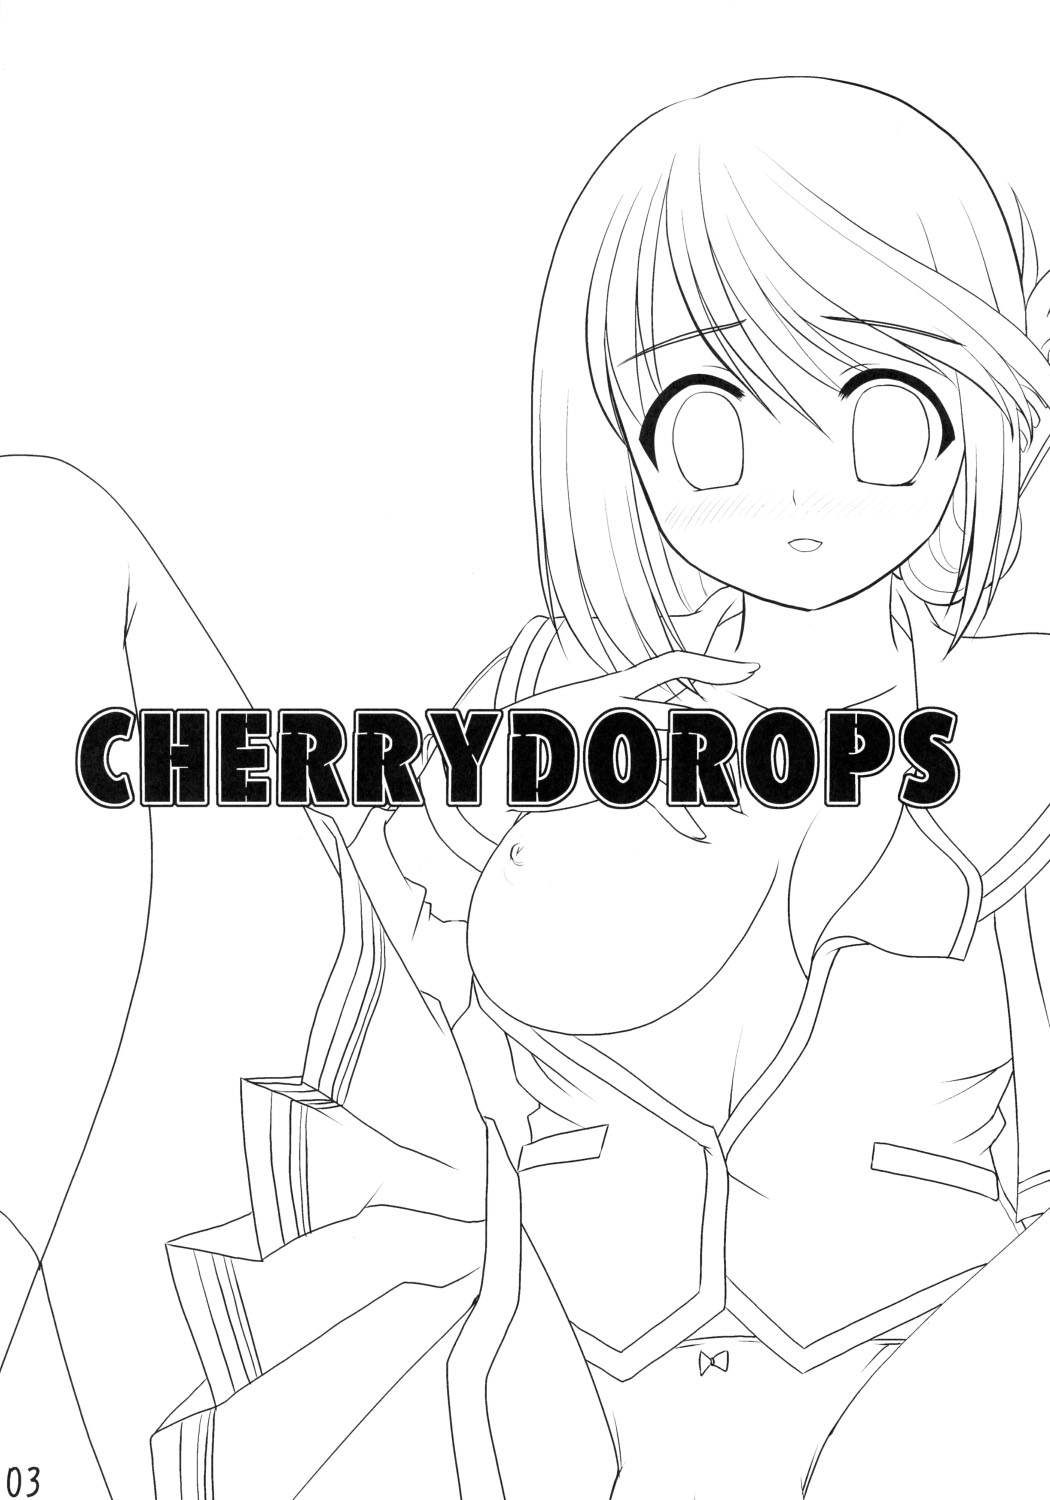 [Scramble Egg] Cherry Drops (To Heart 2) 